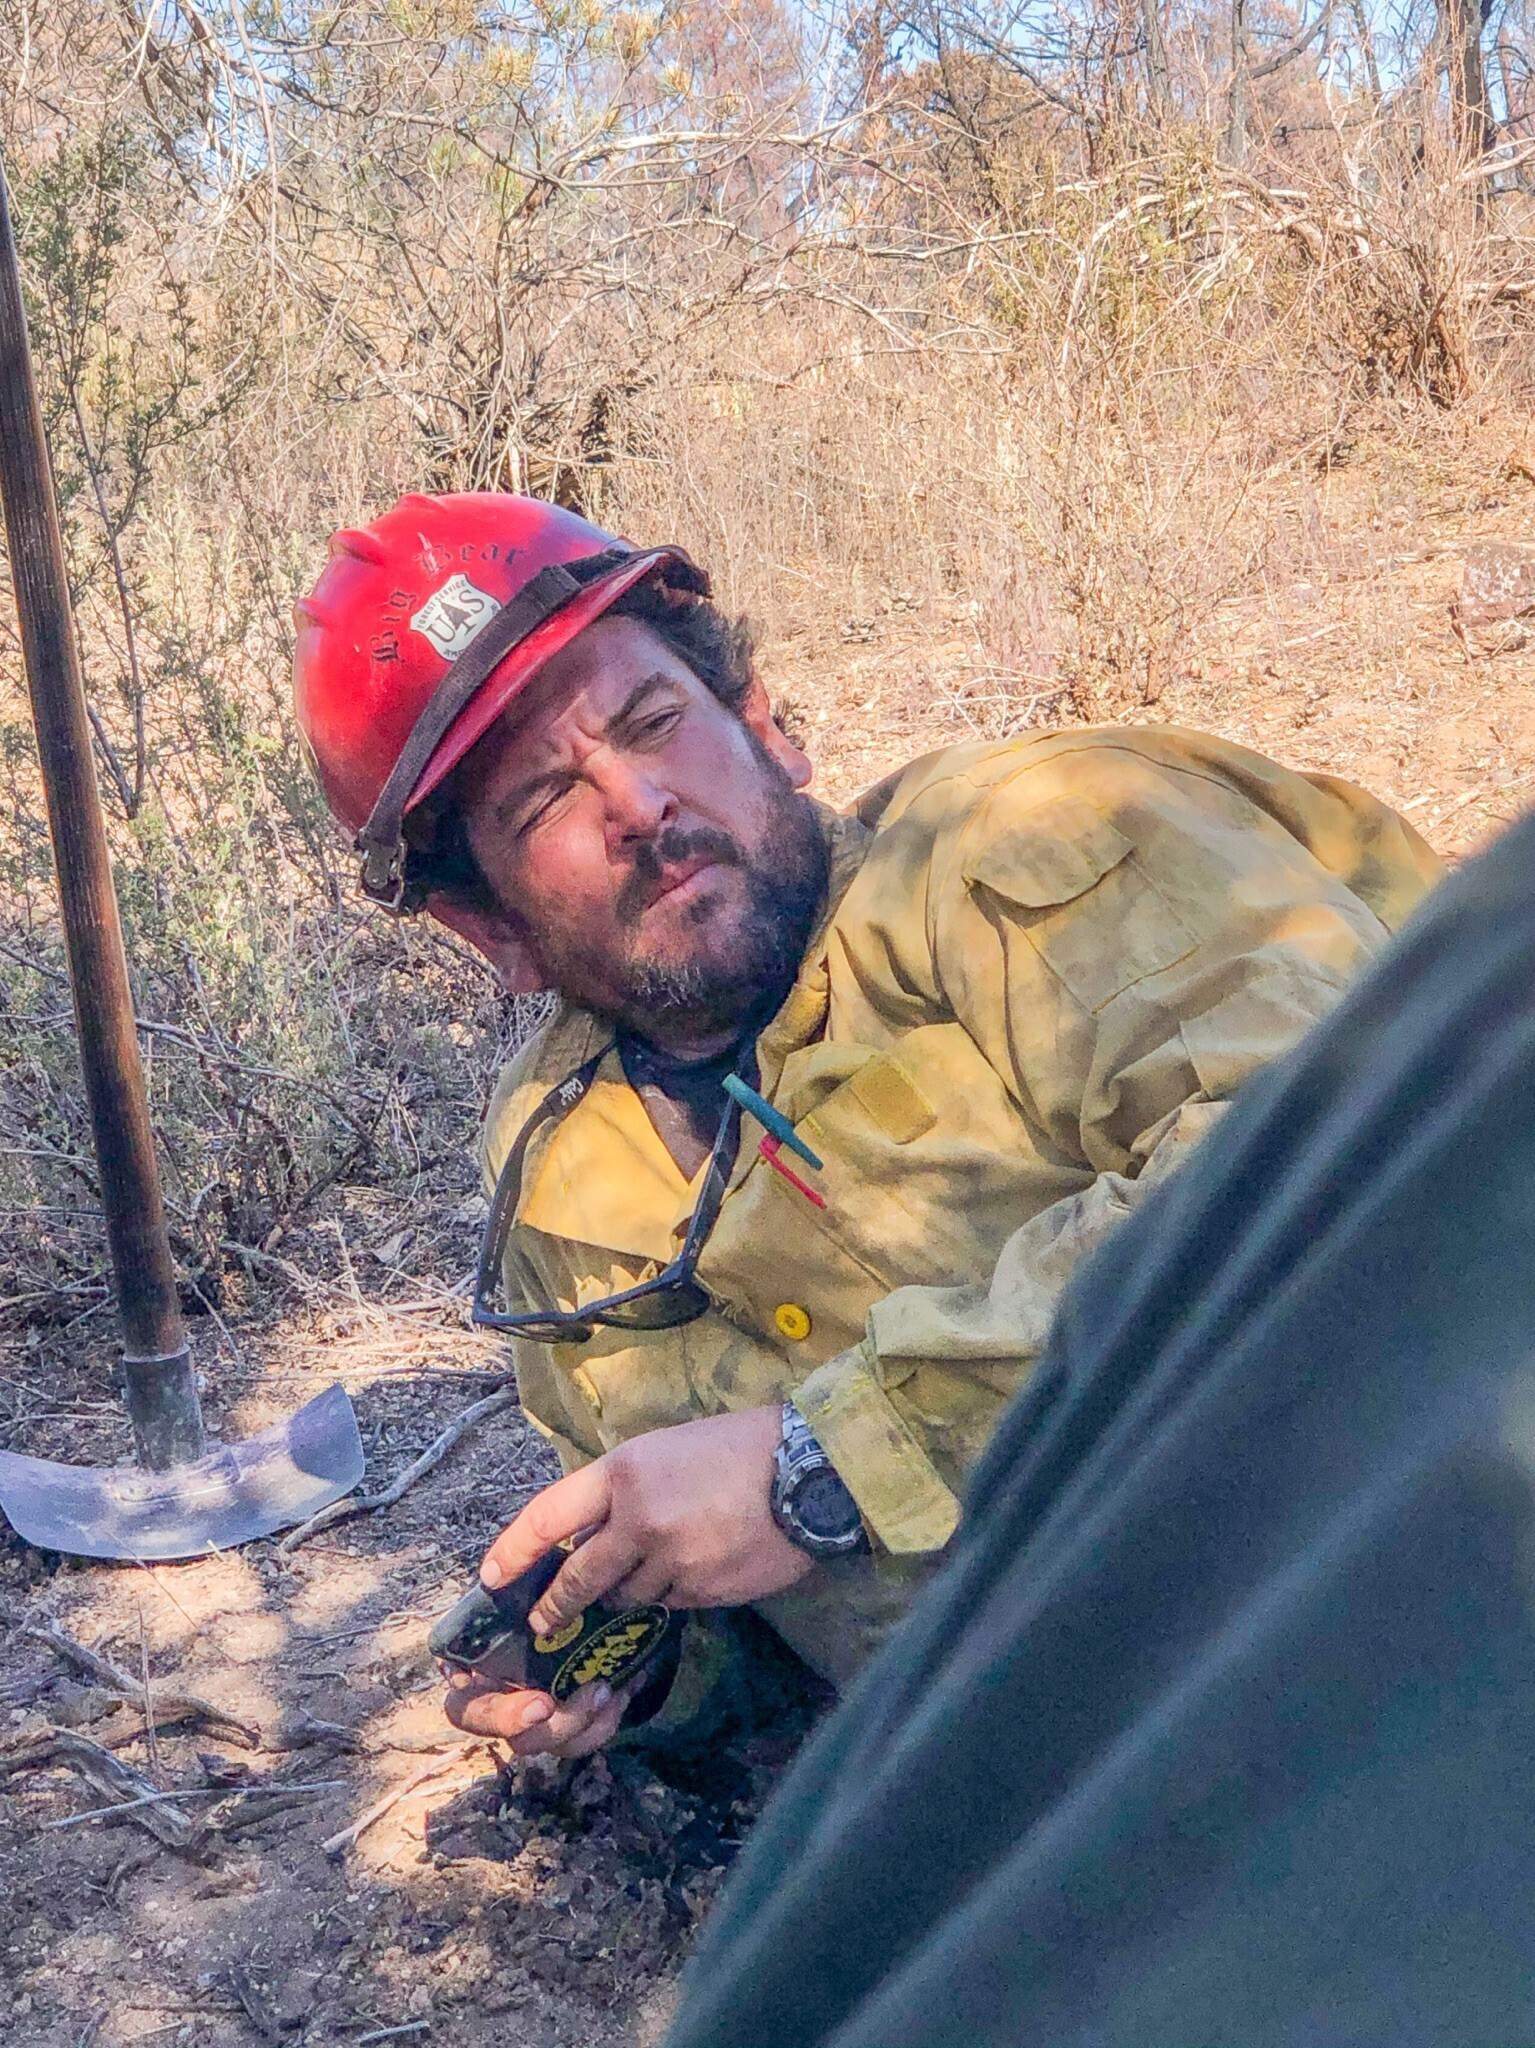 Firefighter who died in blaze was on elite Hotshot crew